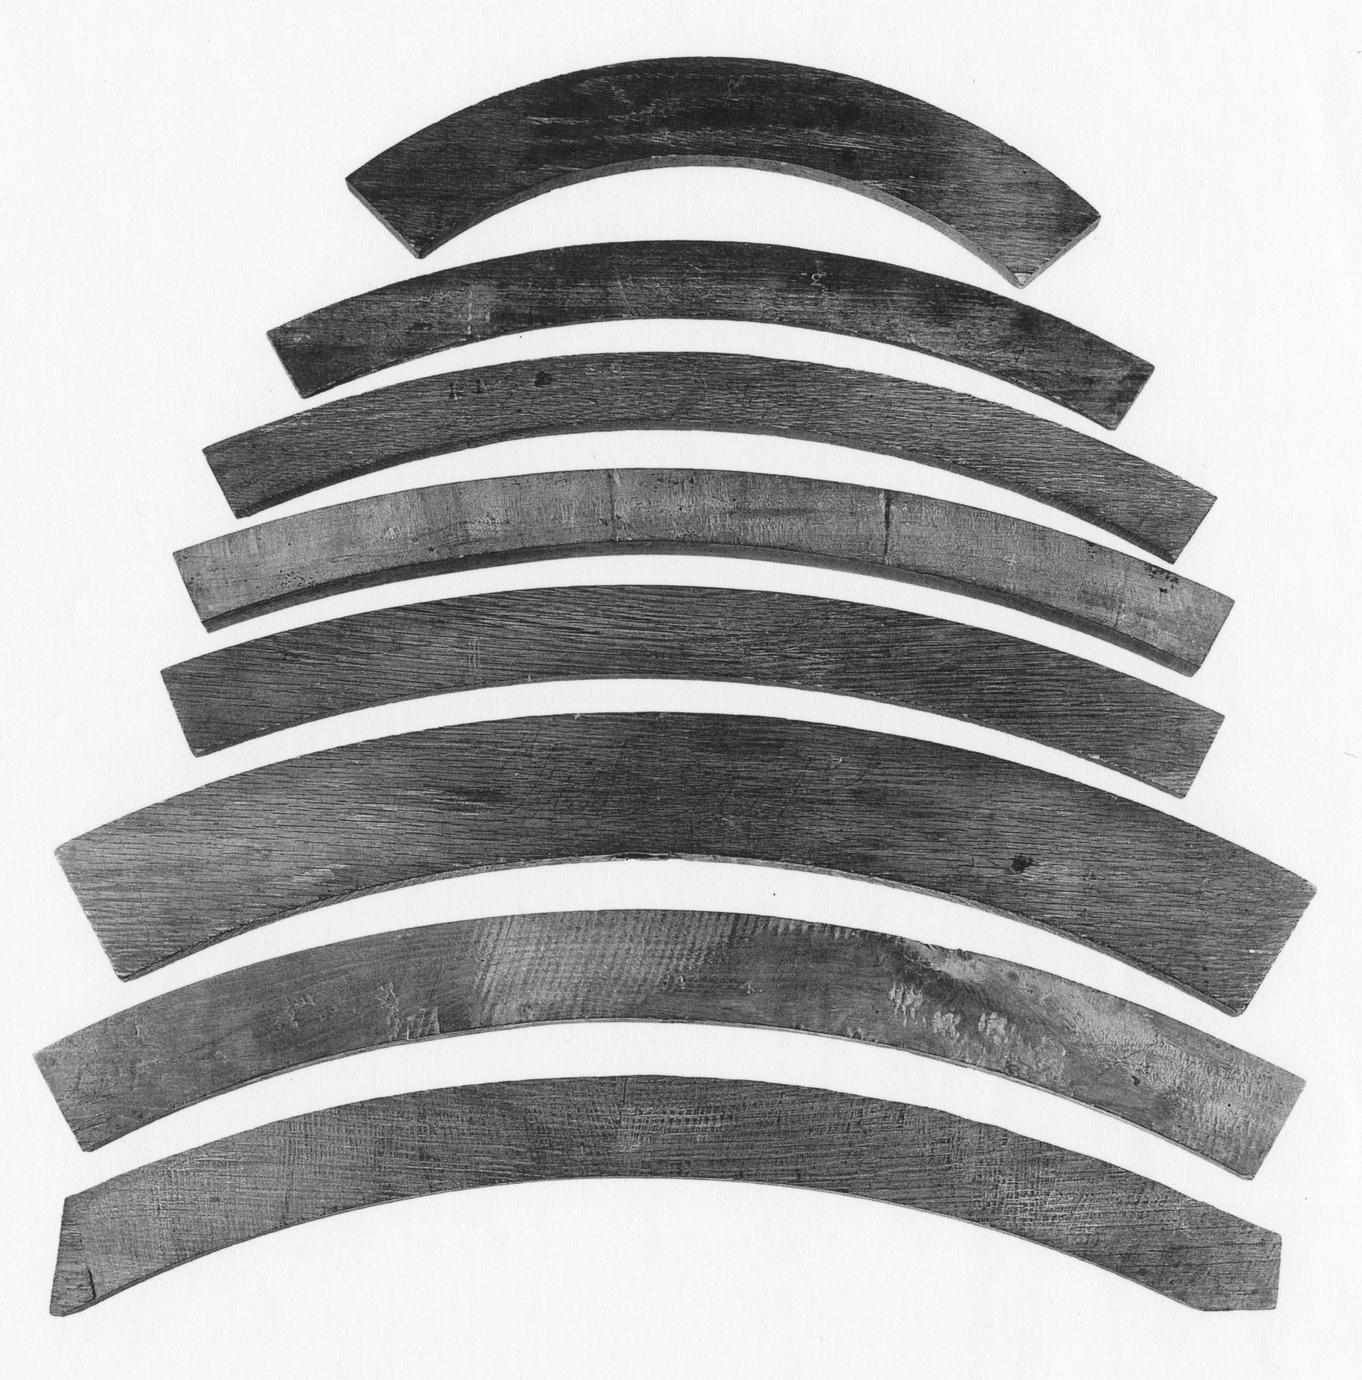 Black and white photograph of various wheel rim or felloe patterns.